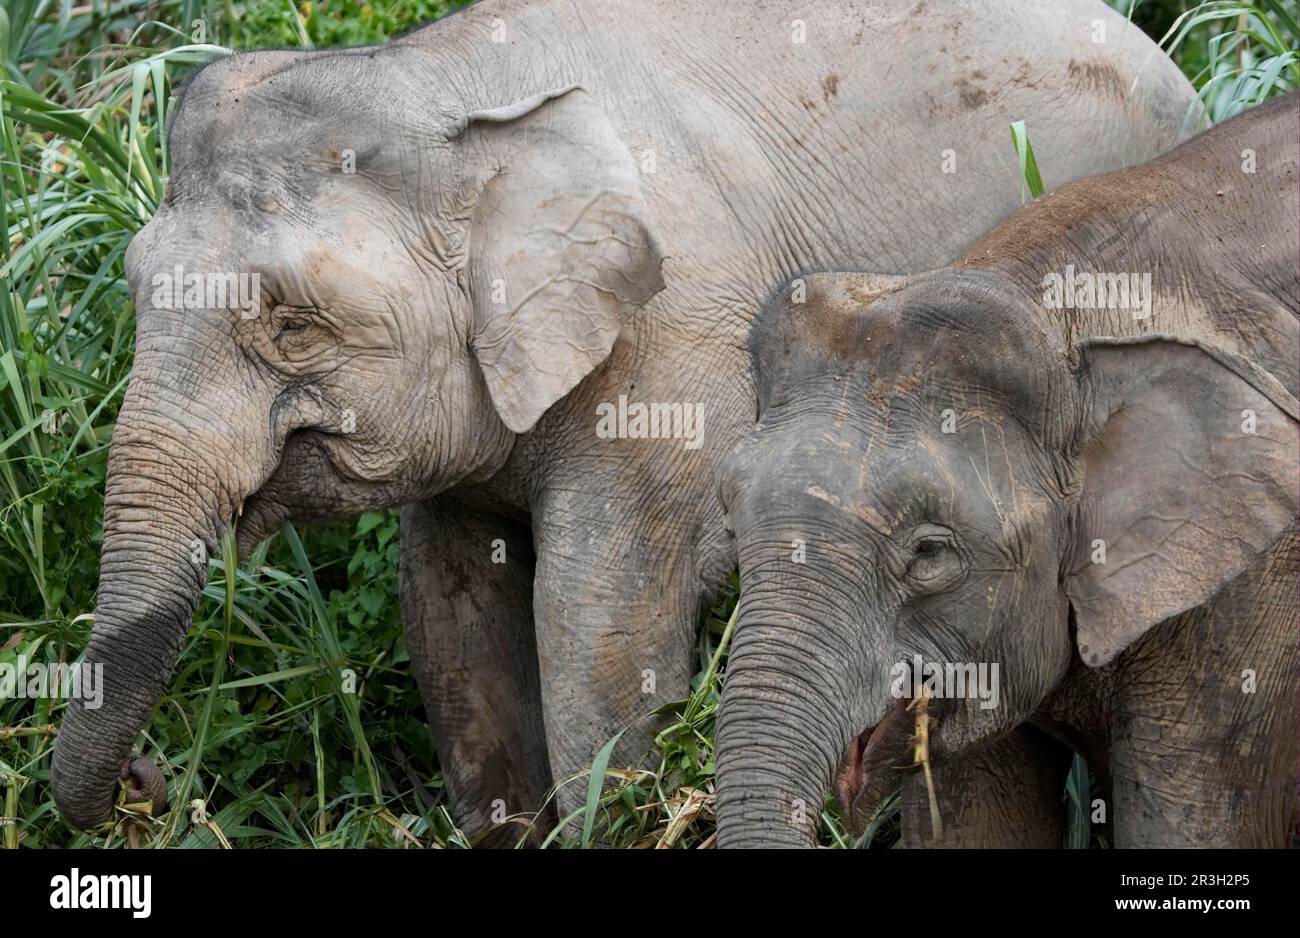 Borneo-Zwergenelefant, Borneo-Elefant, Borneo-Zwergenelefant, borneo-Zwergenelefant (Elephas maximus borneensis), Elefanten, Säugetiere, Tiere Stockfoto